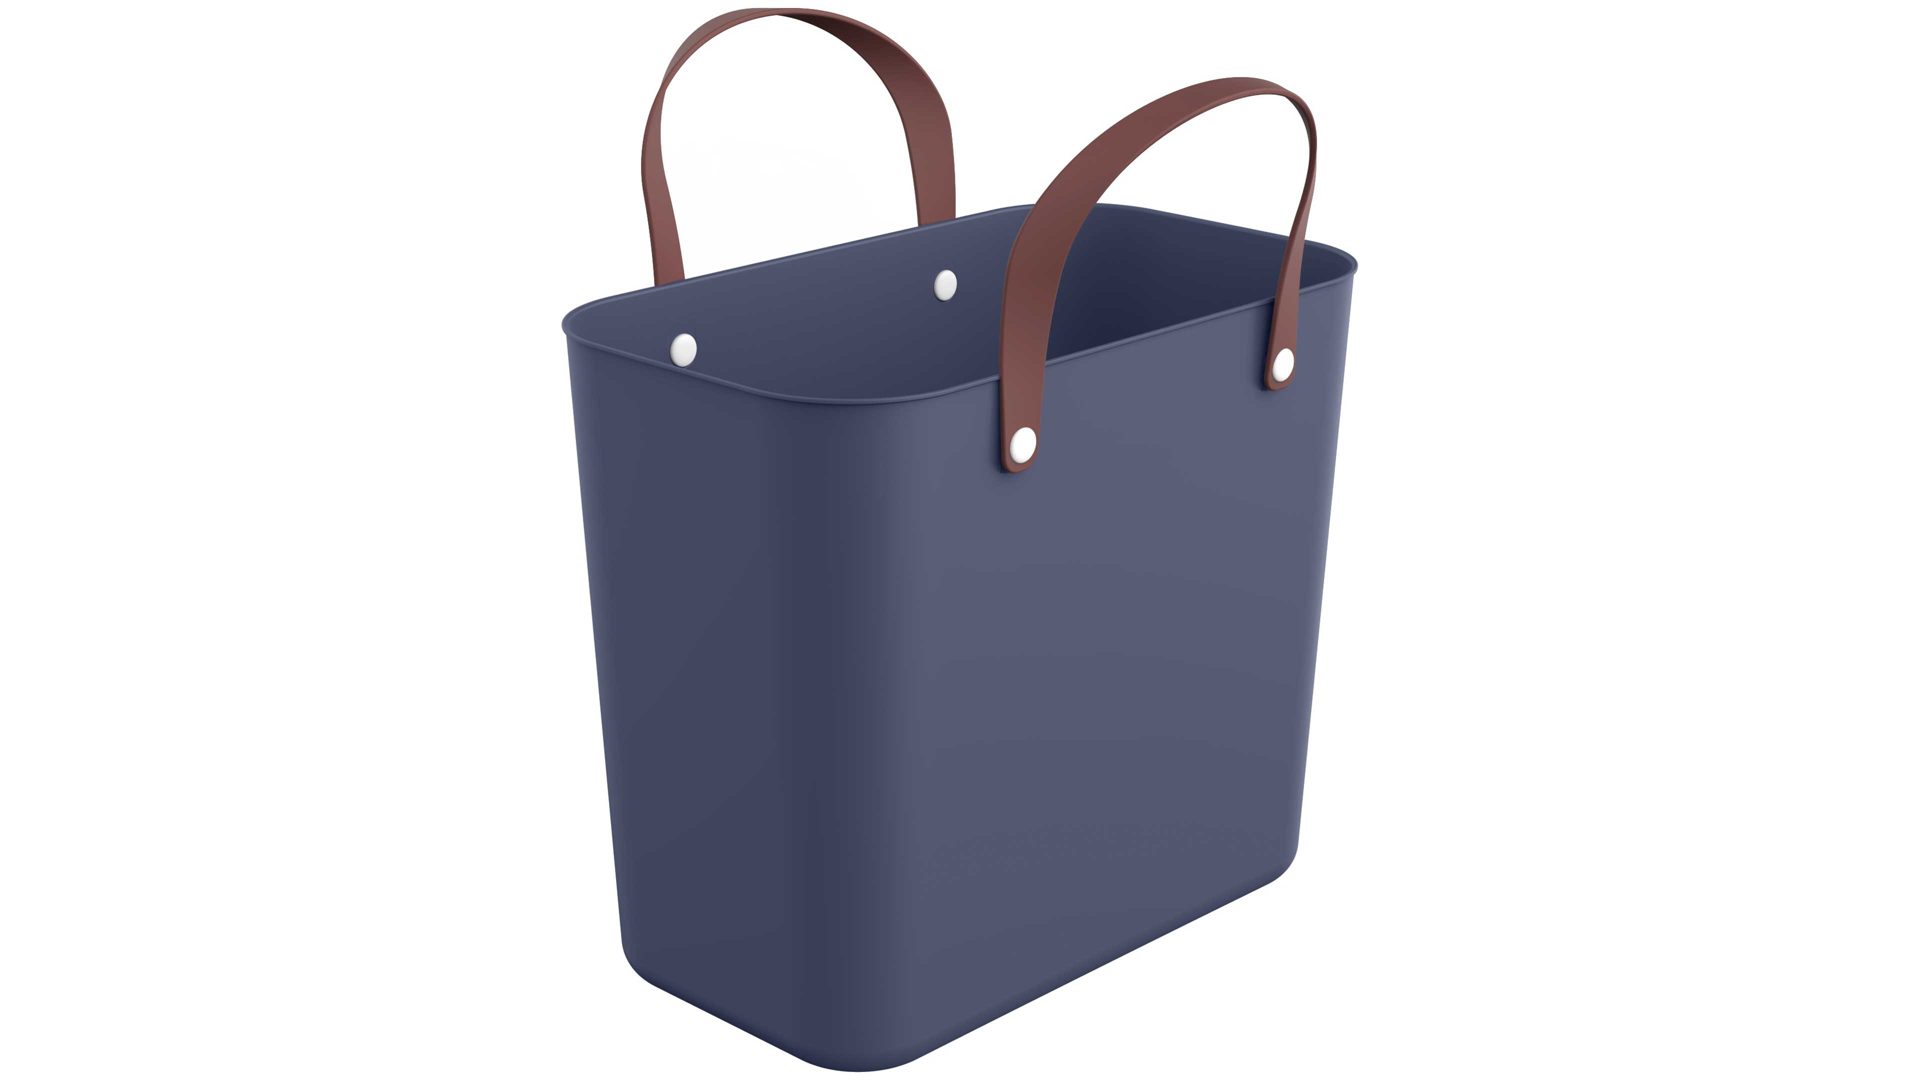 Tasche Rotho aus Kunststoff in Dunkelblau rotho modulares Recycling Müllsystem Albula - Multibag Style Irisblau - ca. 25 Liter